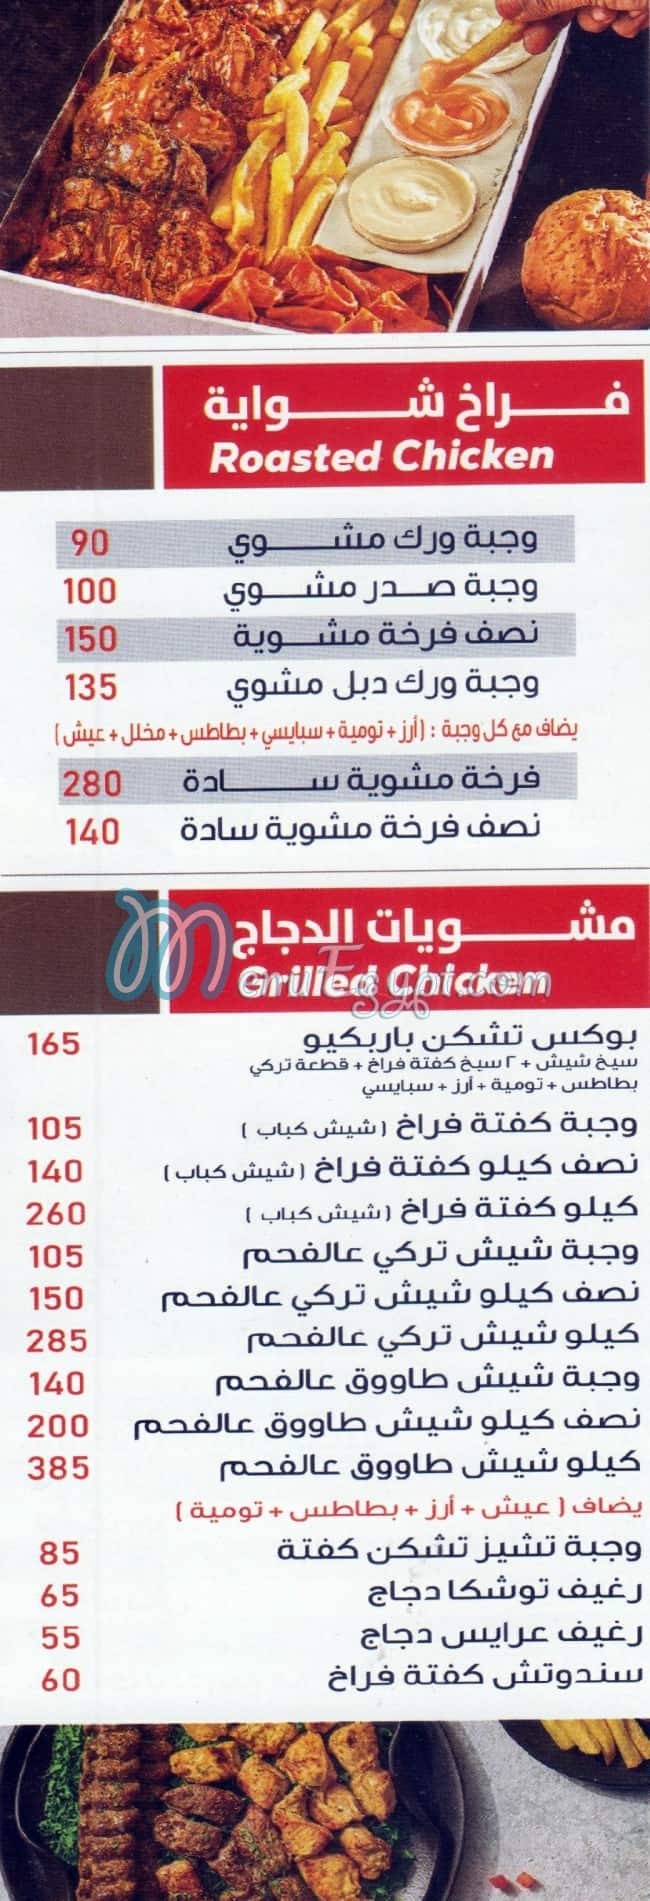 Chikno menu Egypt 1